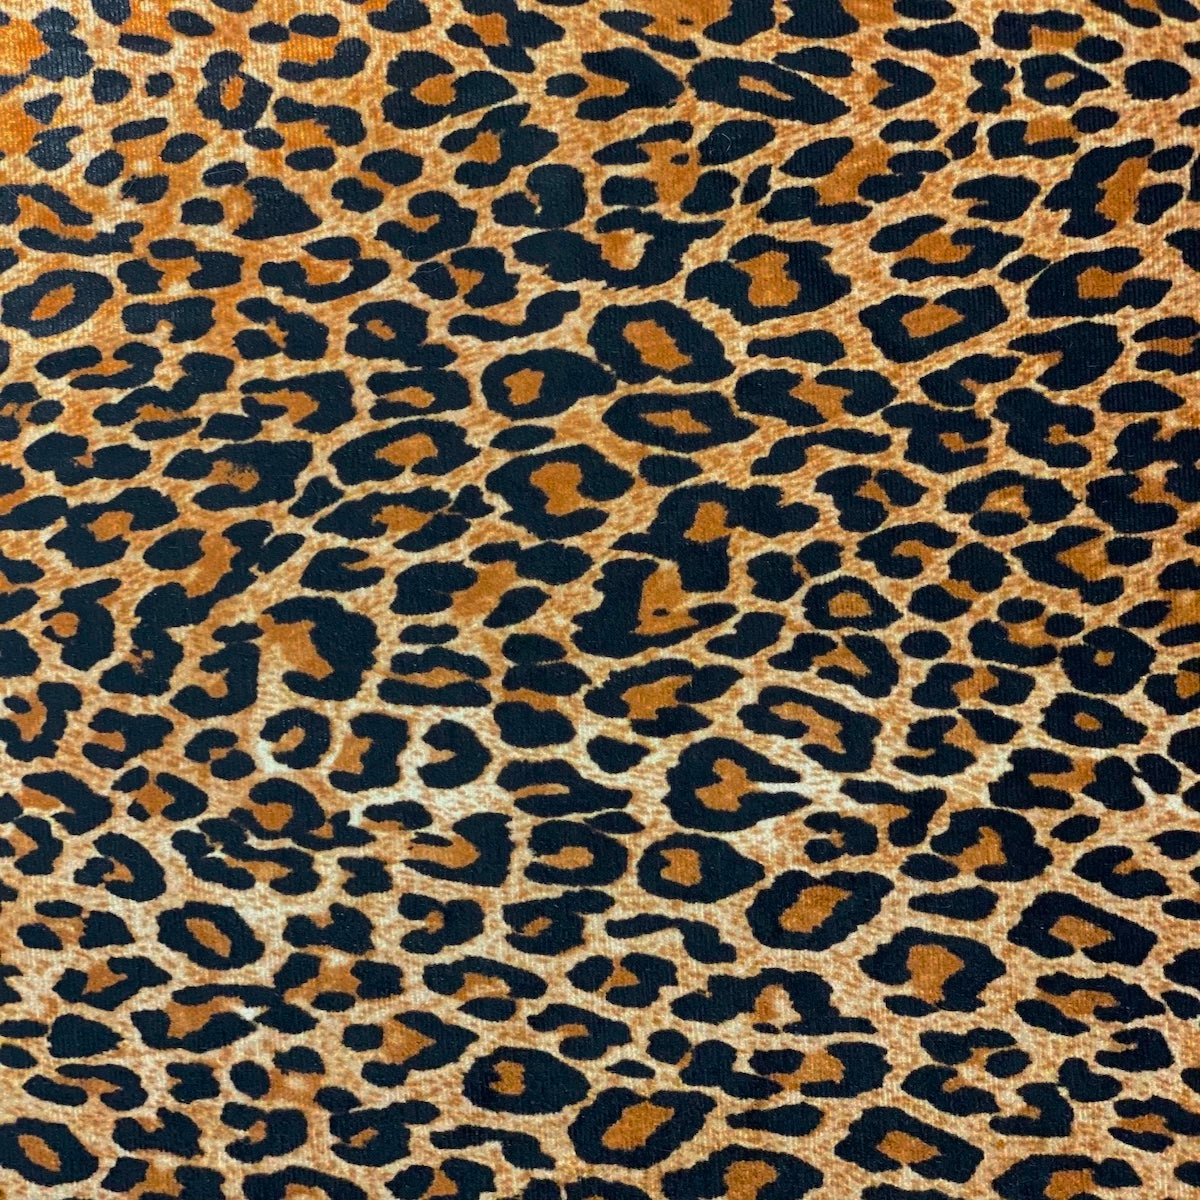 Baby Leopard Print Stretch Velvet Fabric - Fashion Fabrics Los Angeles 